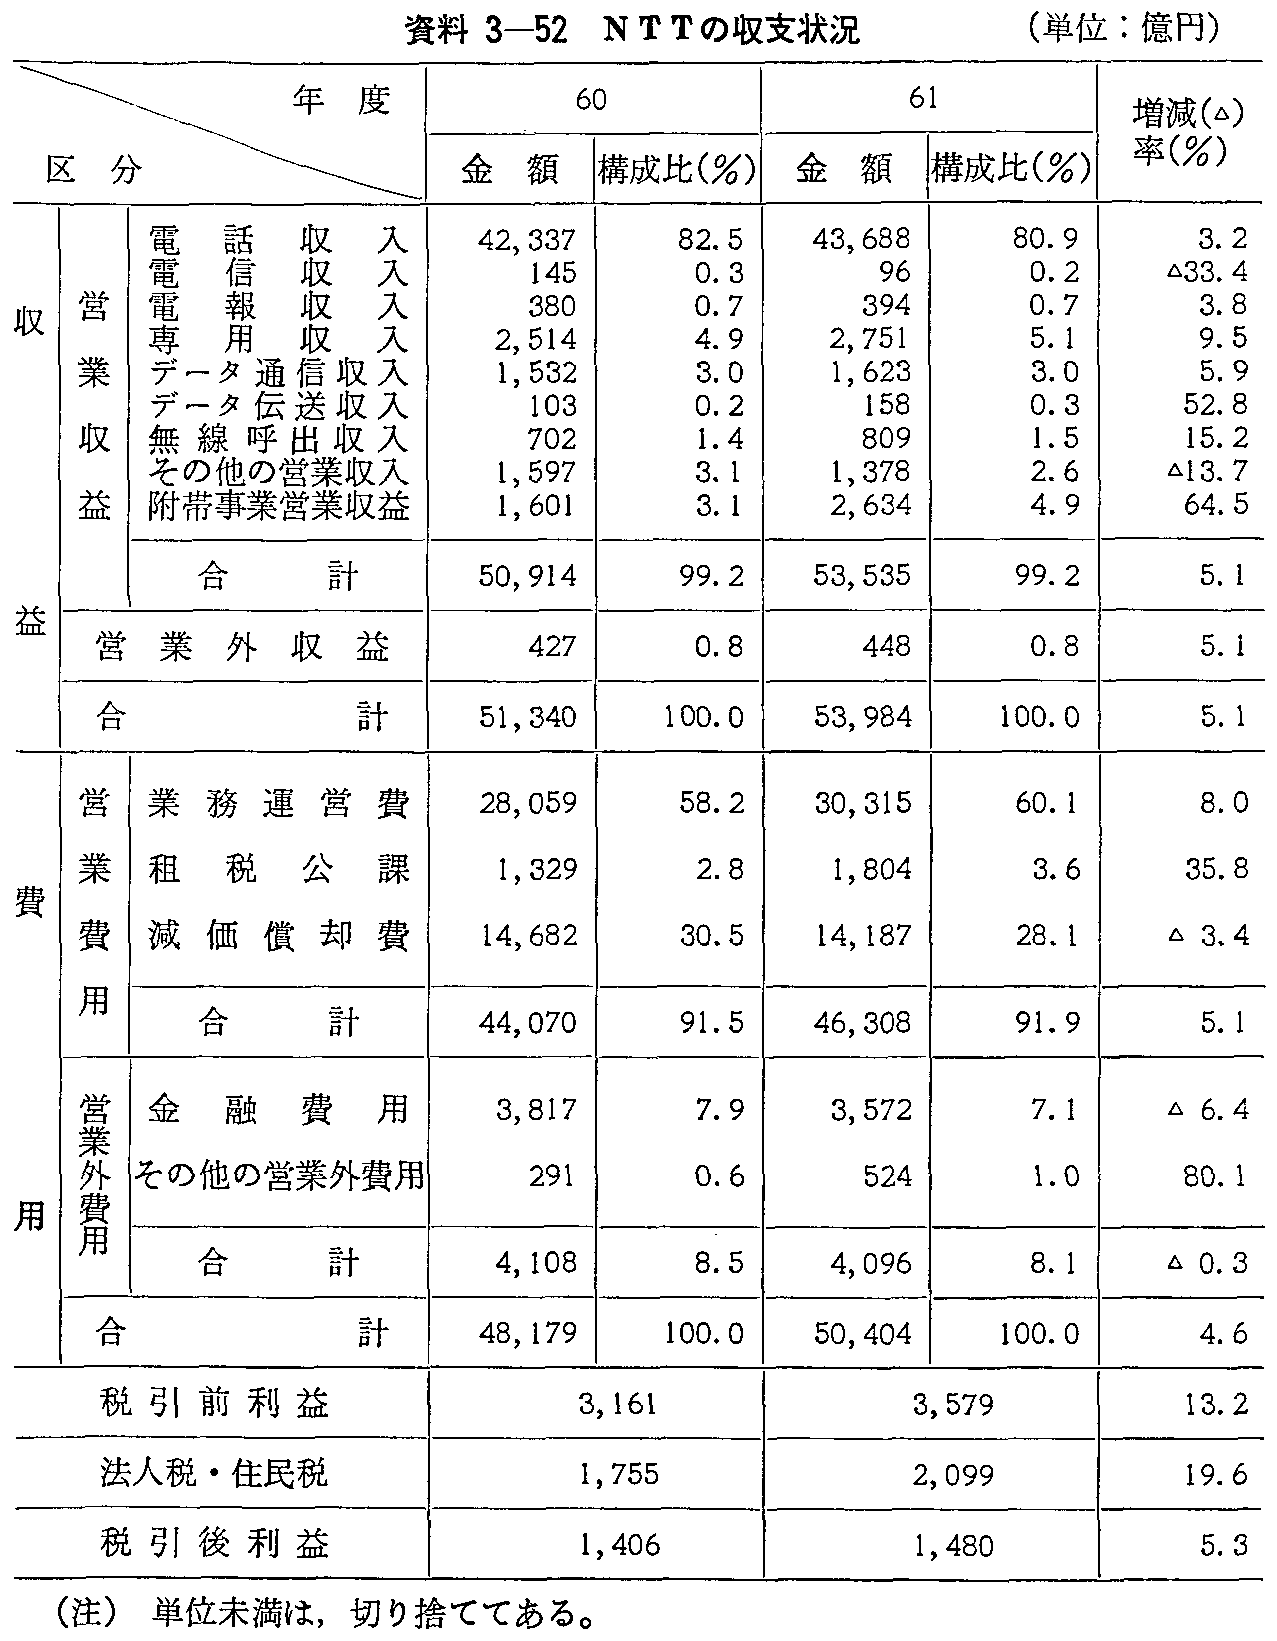 資料3-52 NTTの収支状況